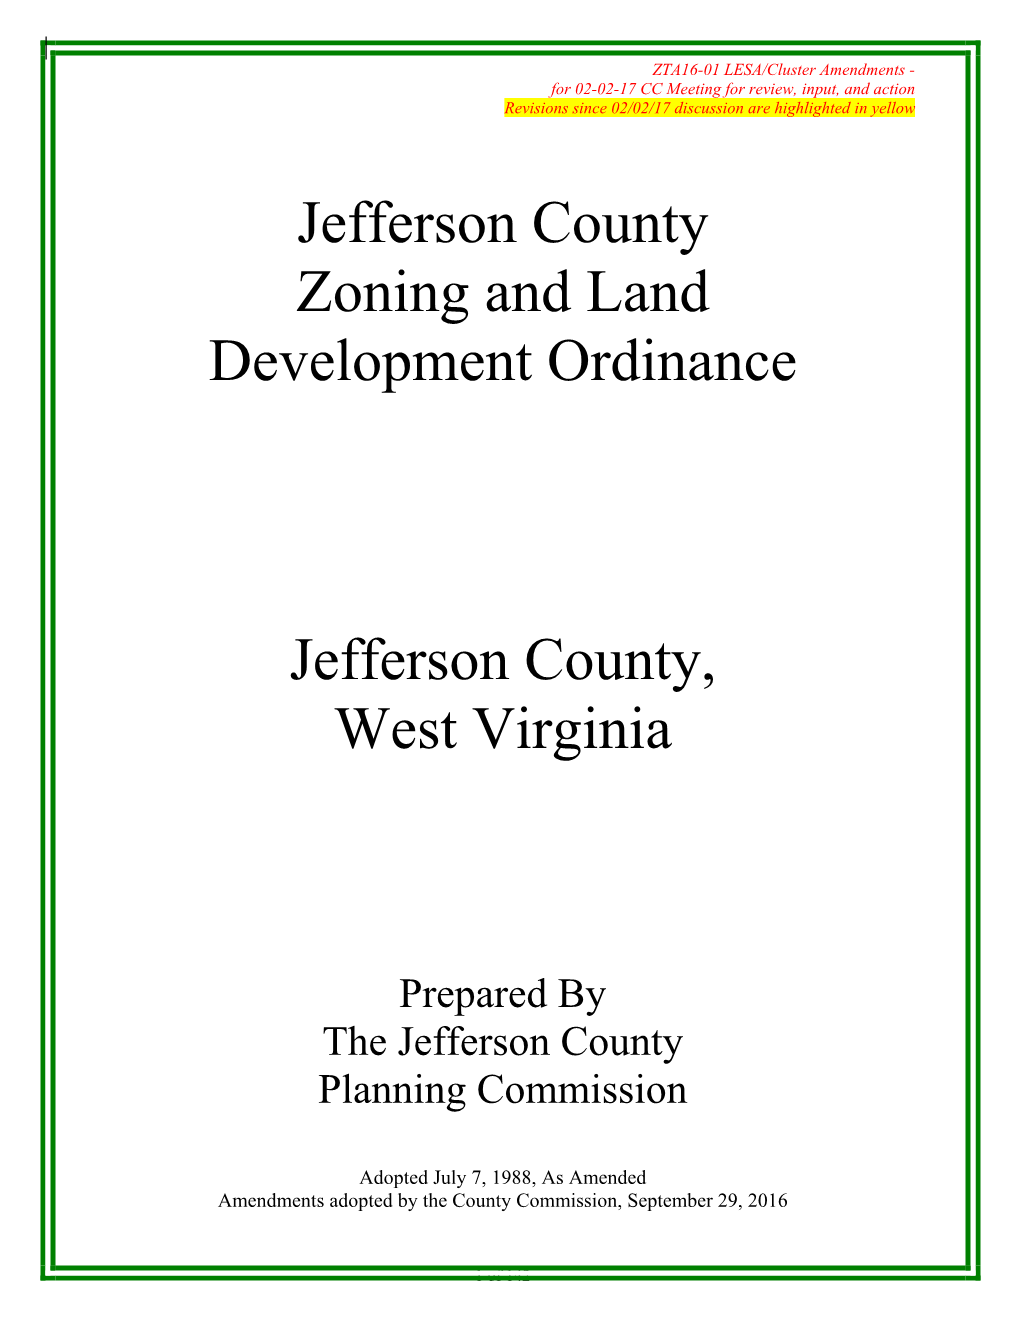 Jefferson County Zoning and Land Development Ordinance